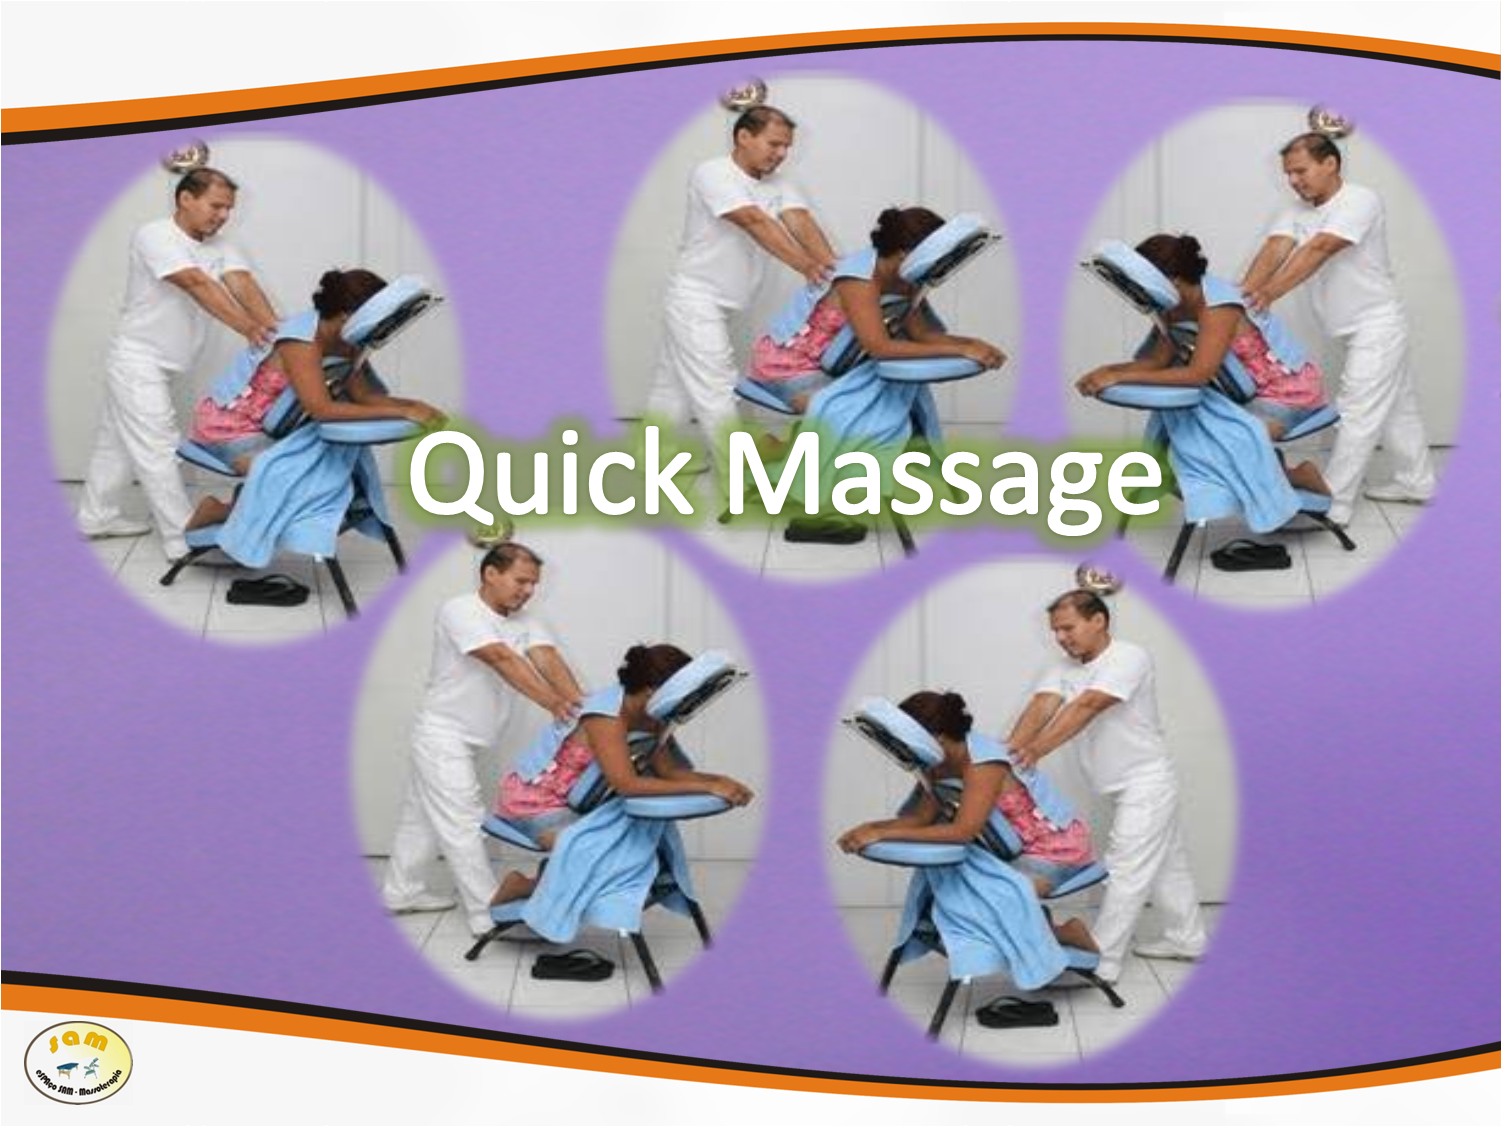 Conheça a Quick massage